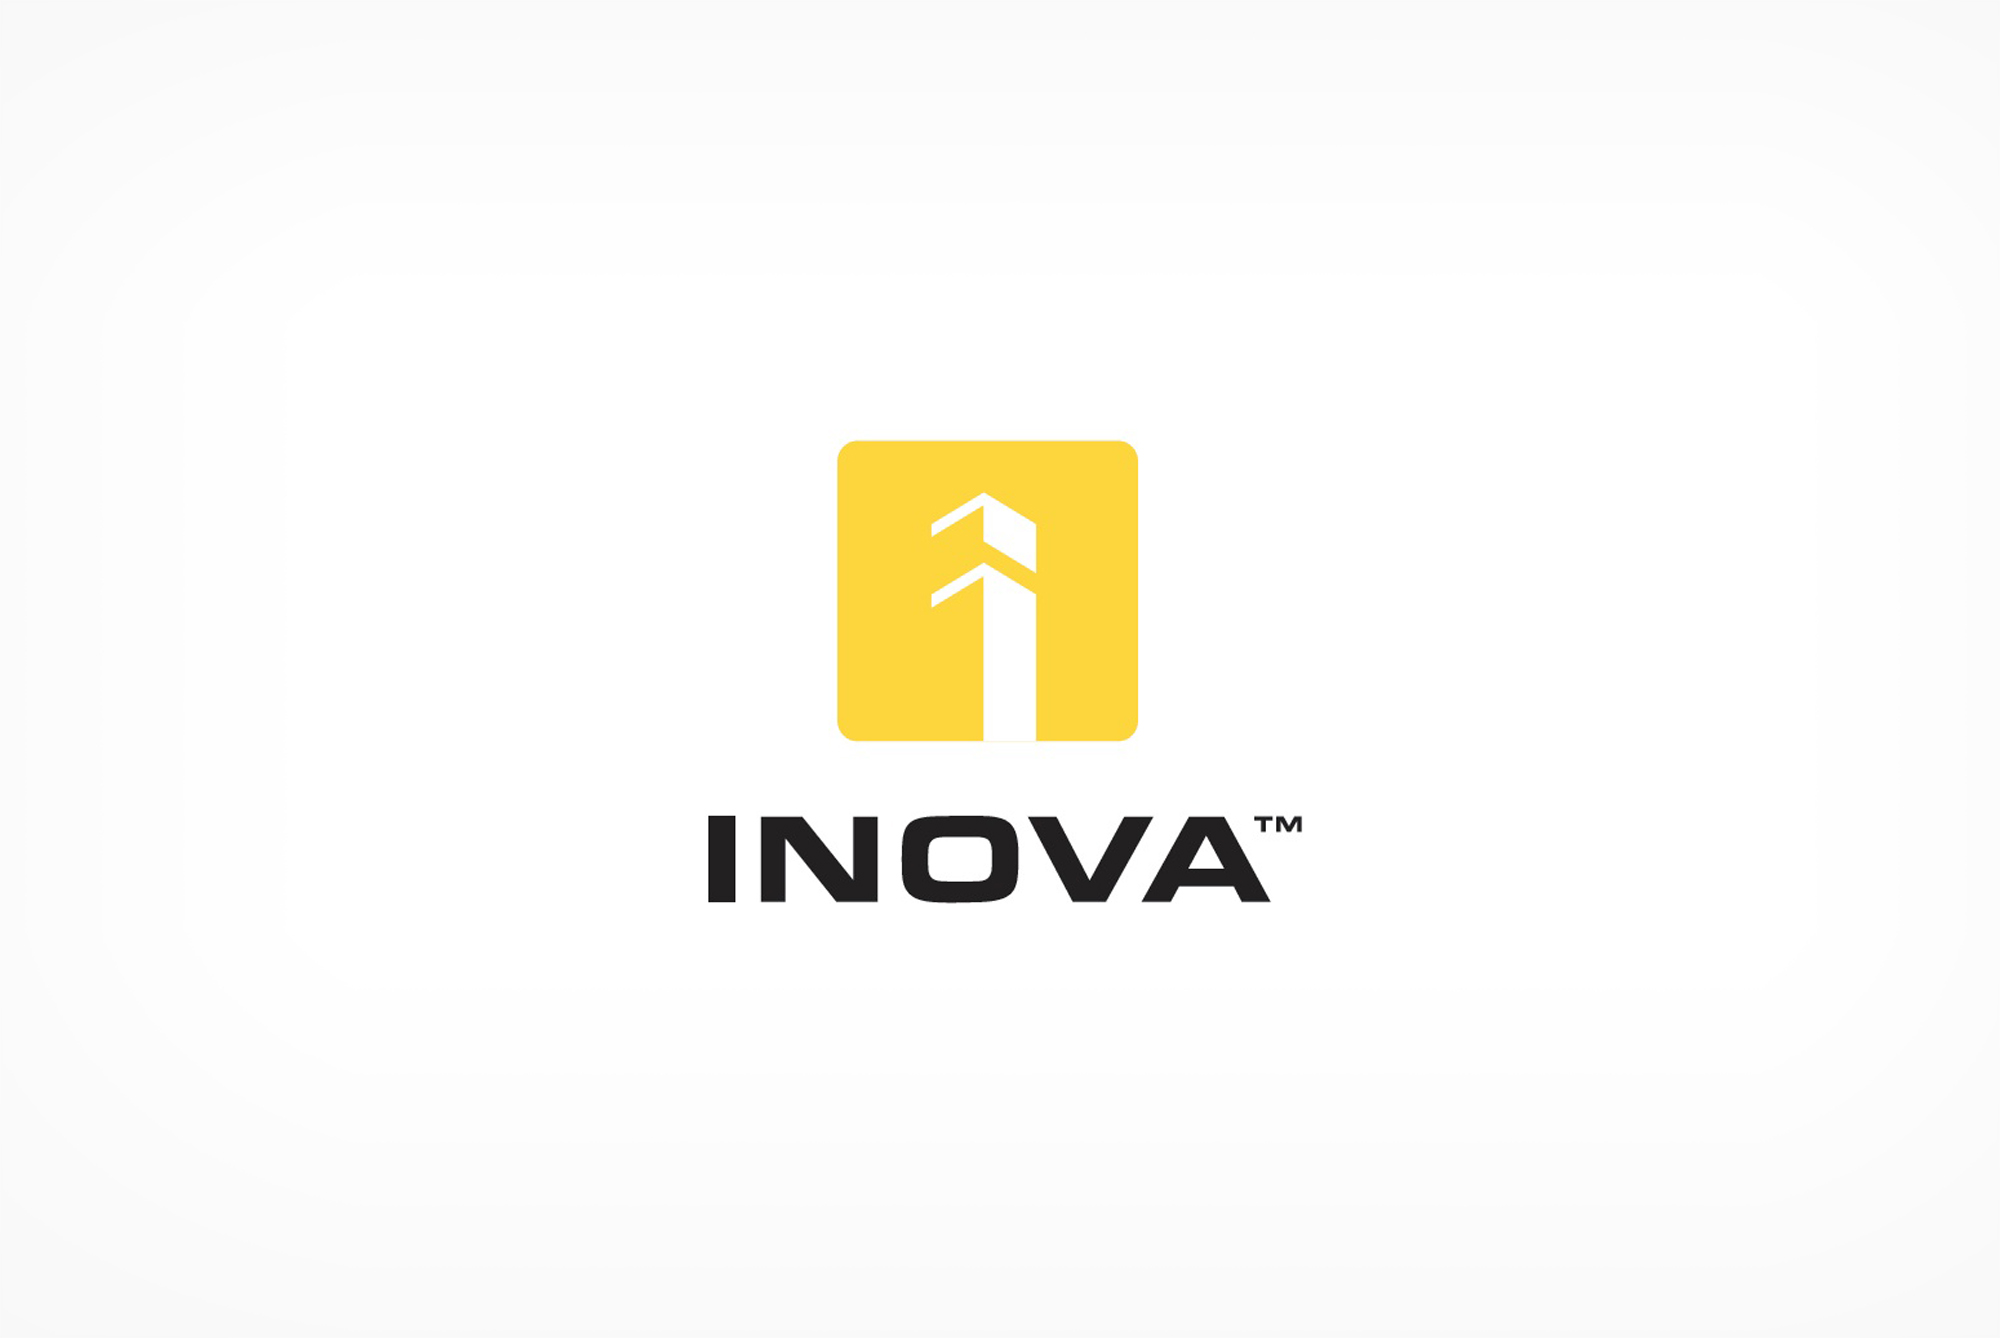 Inova stack server systems brand logo.